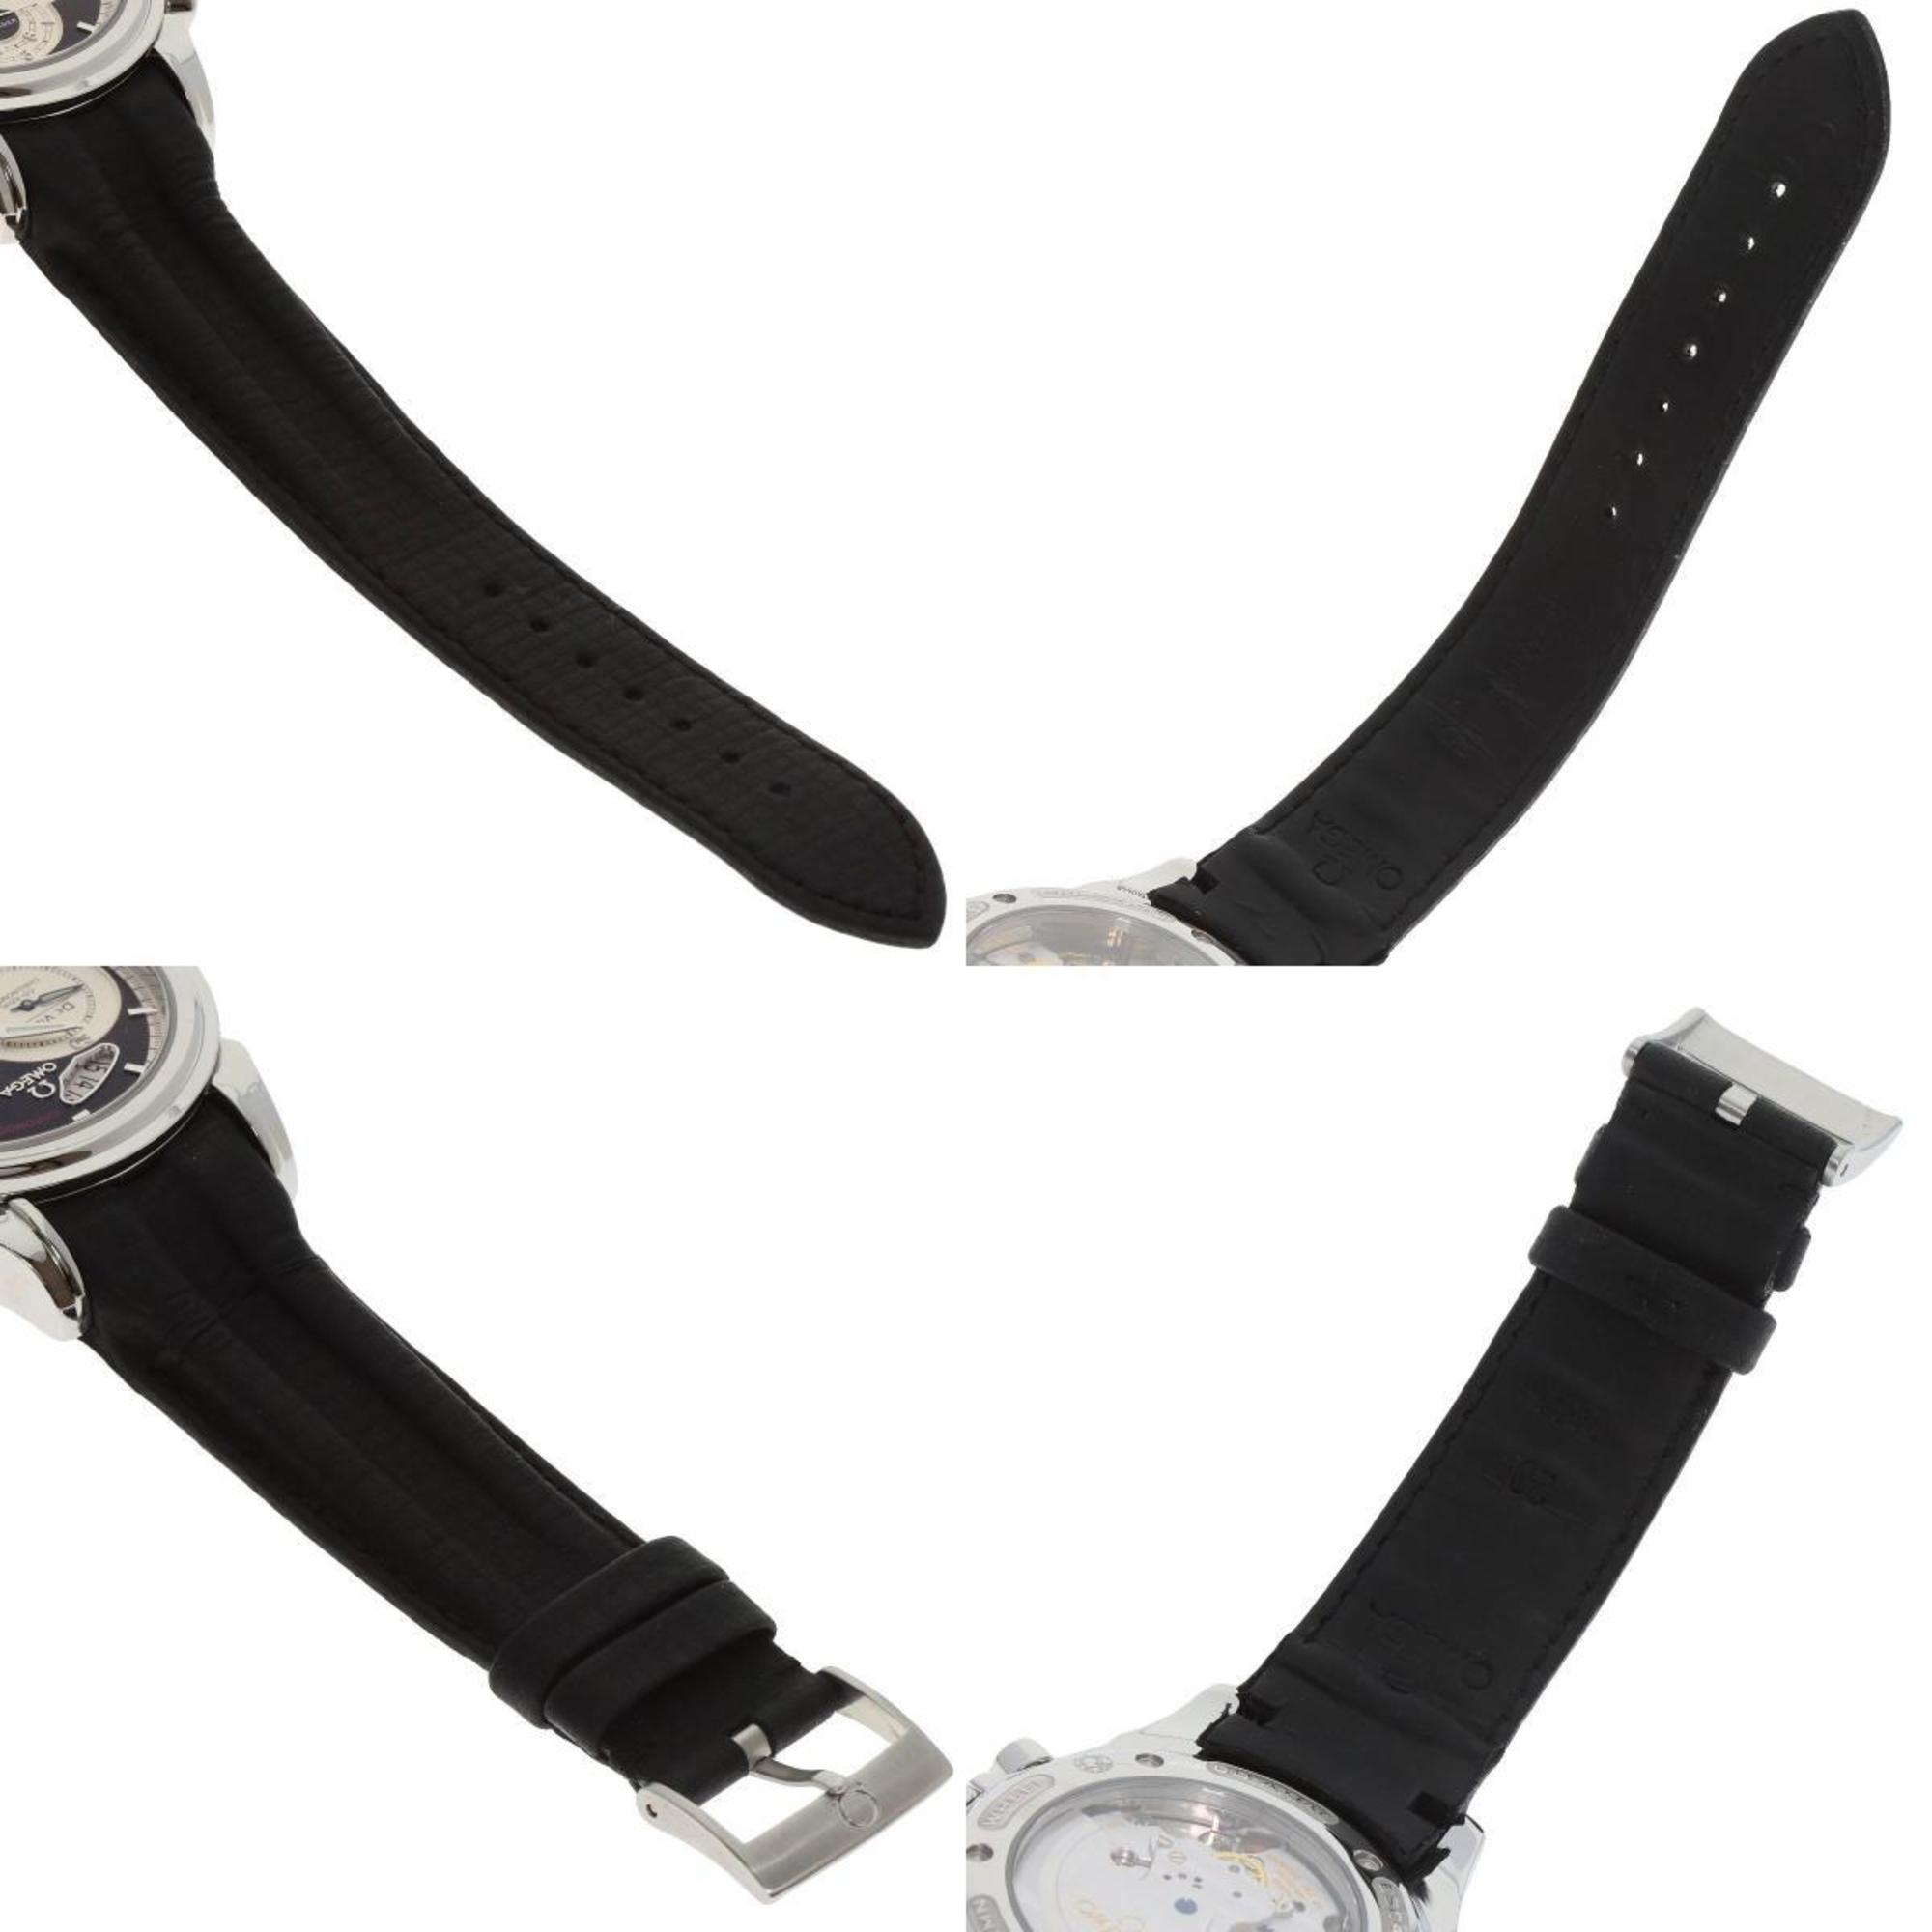 Omega 4550.50.31 De Ville Chronoscope Co-Axial Watch Stainless Steel Rubber Men's